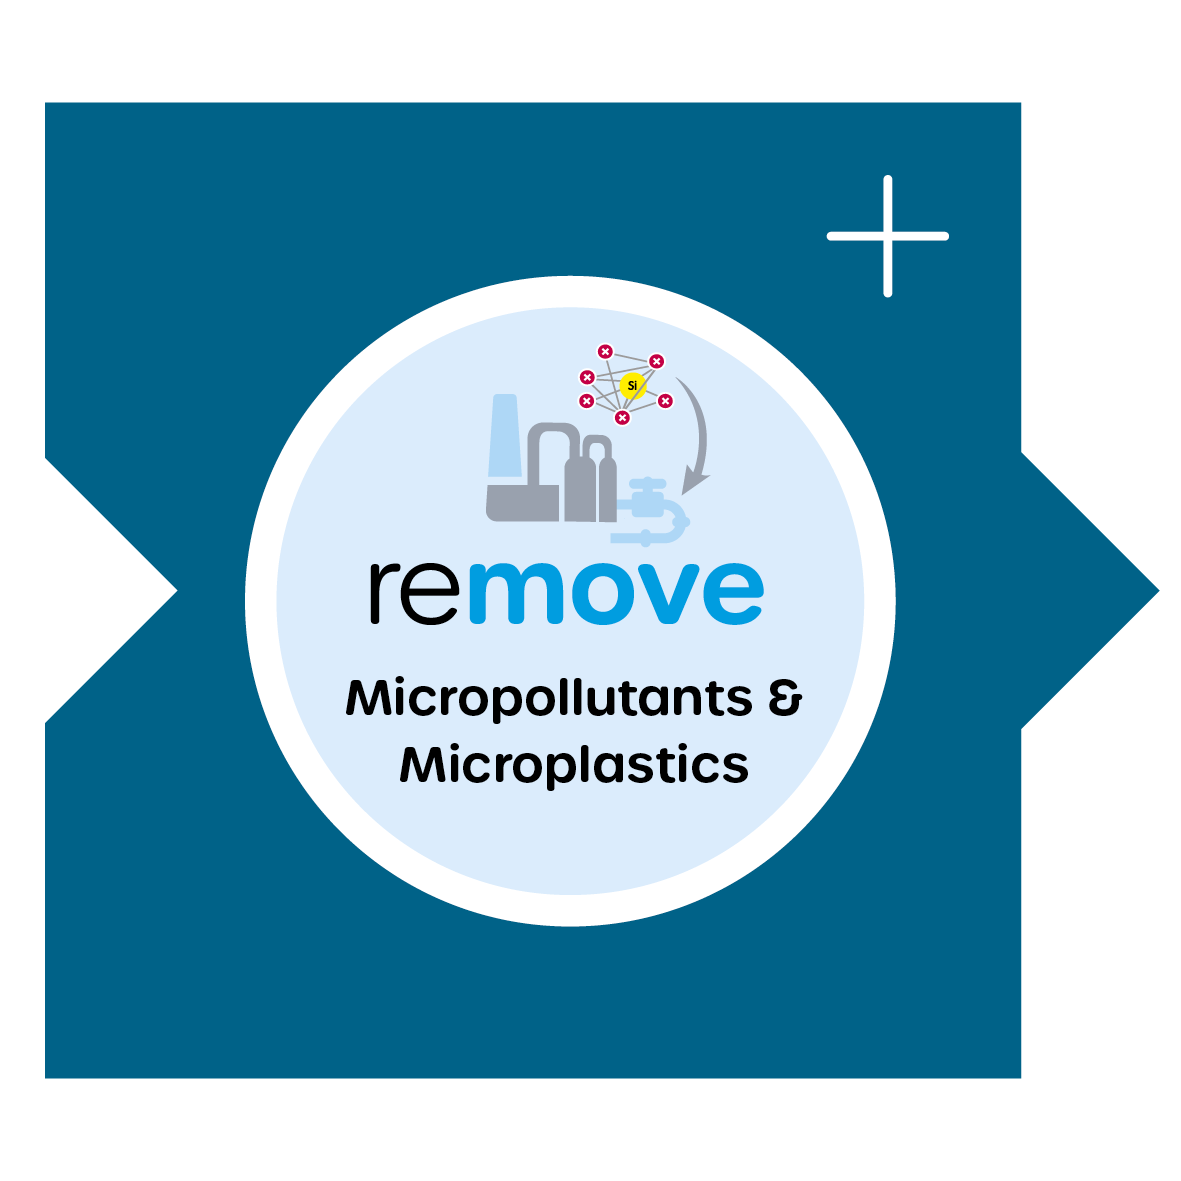 remove Micropollutants and microplastics / Mikroschadstoffe und Mikroplastik